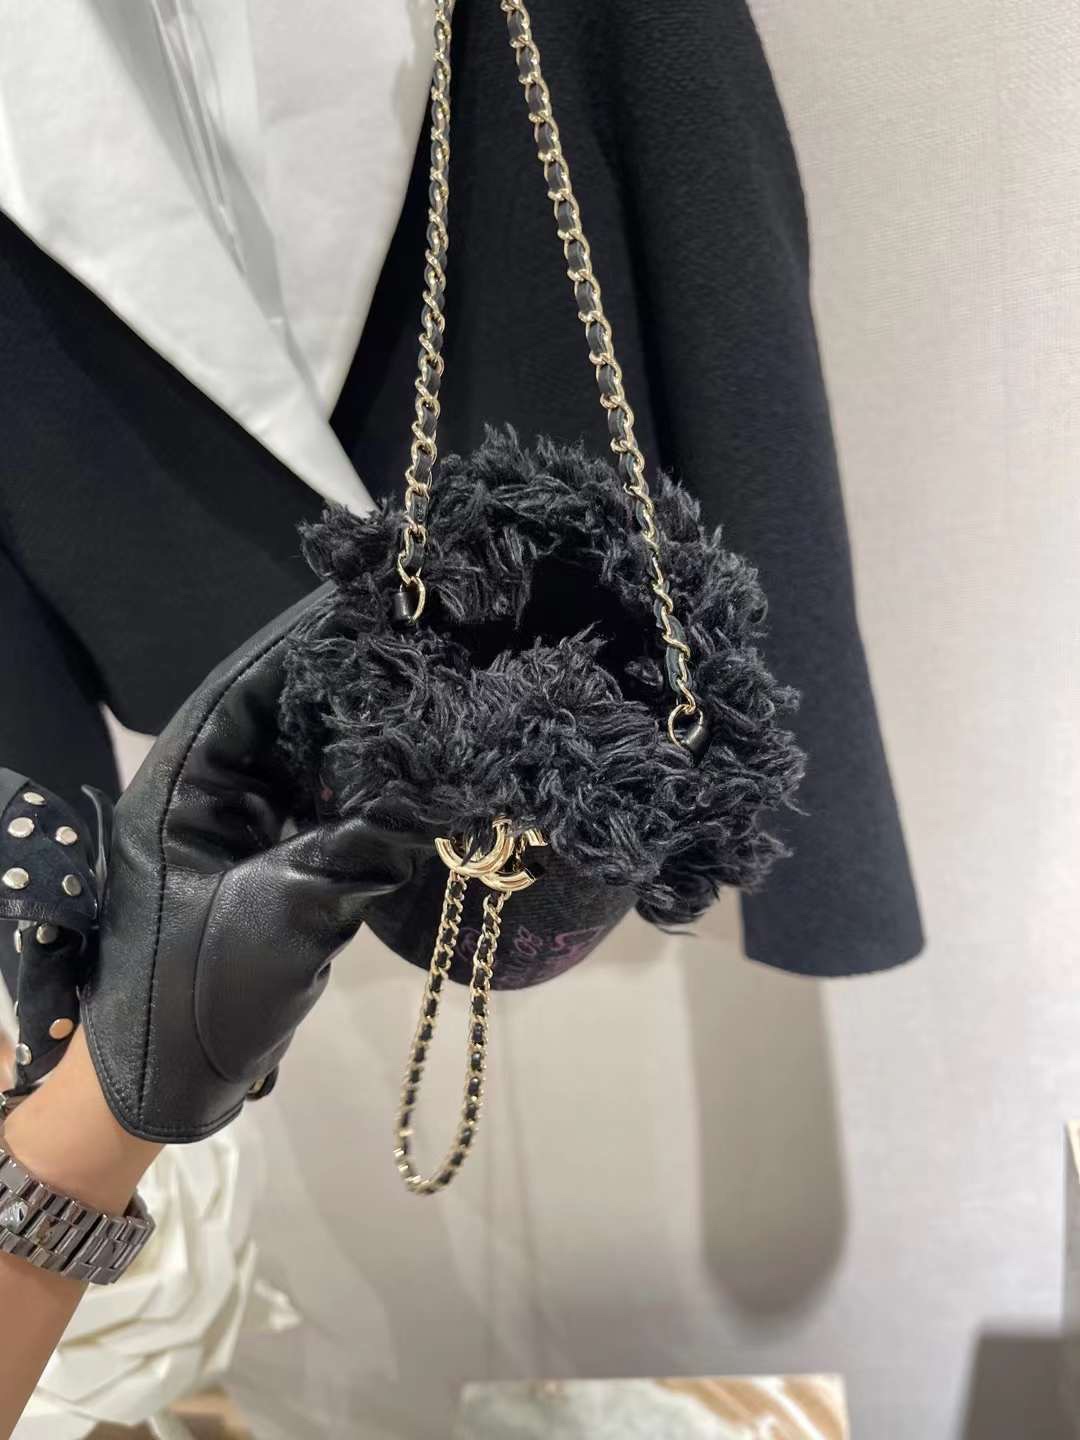 【P870】Chanel包包批发 香奈儿新款黑色涂鸦牛仔布抽口水桶包迷你款